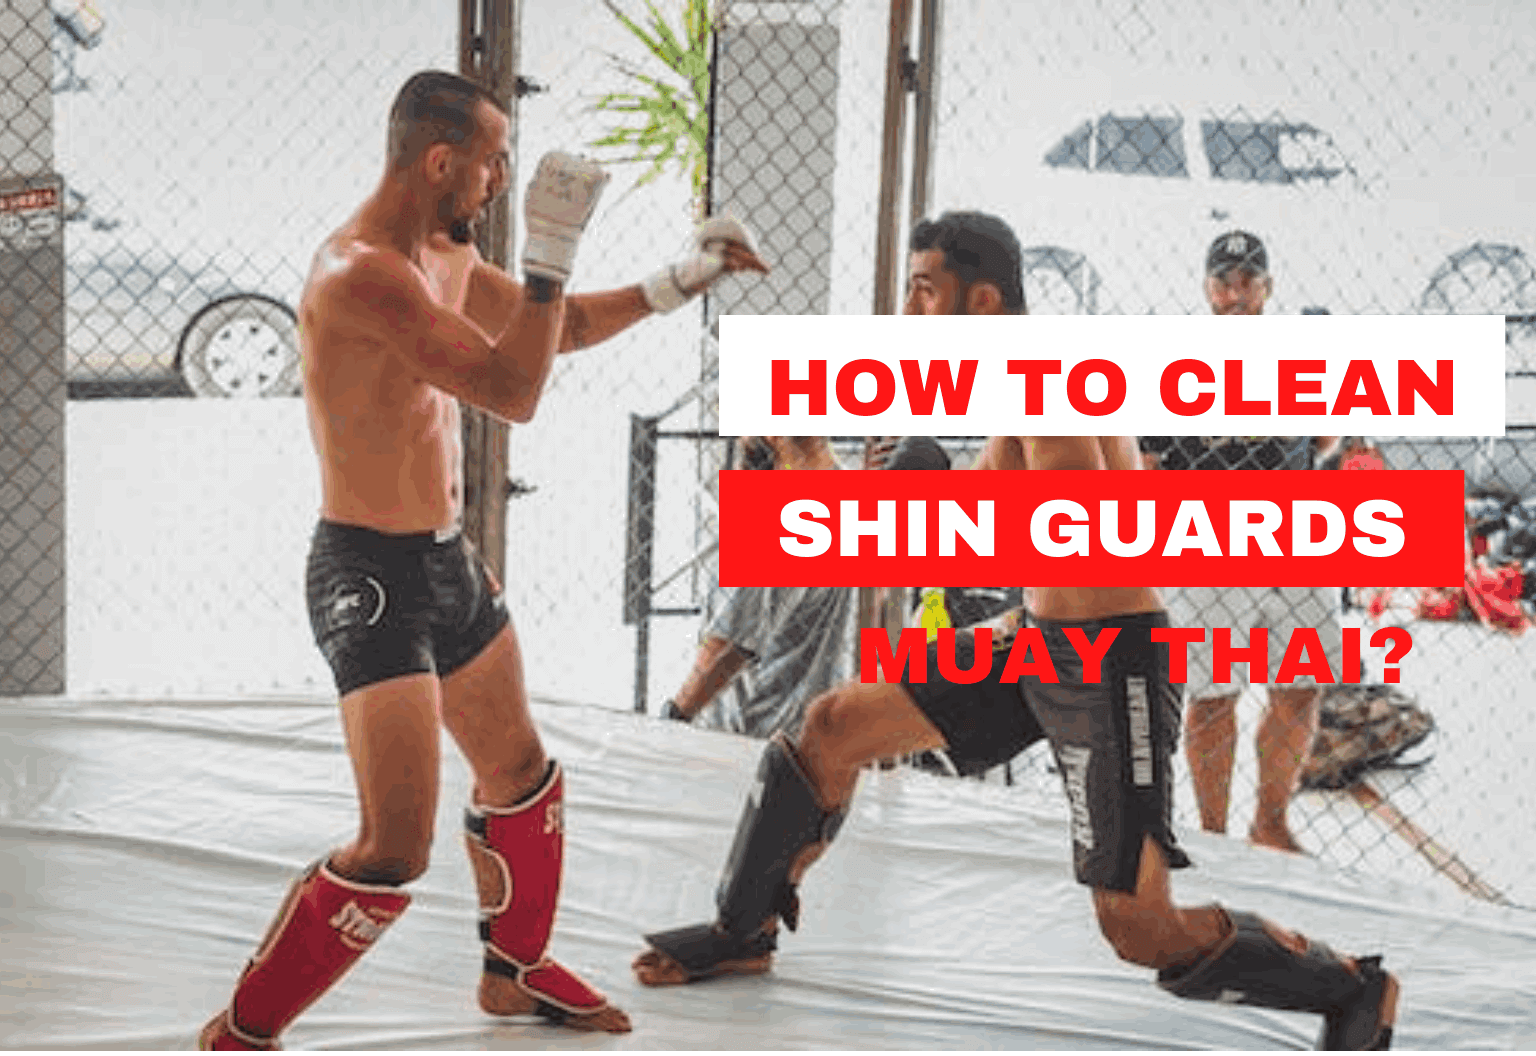 How to Clean Shin Guards Muay Thai-3 Vital Steps